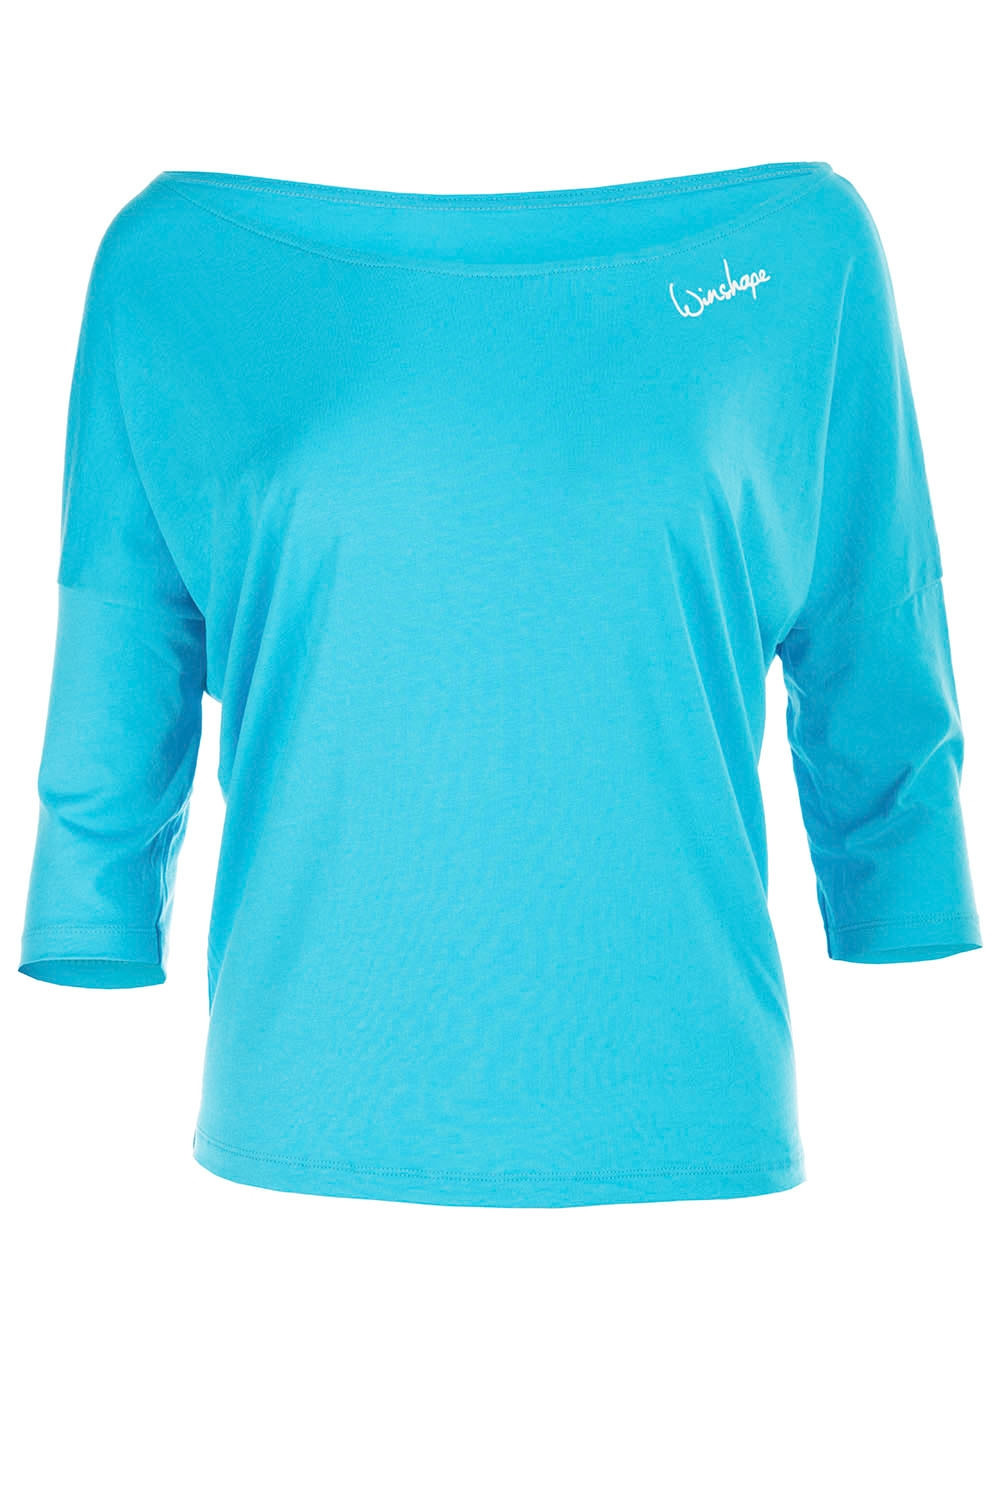 Sky Style Ultra Blue, Shirt MCS001, Dance Winshape leichtes Modal-3/4-Arm